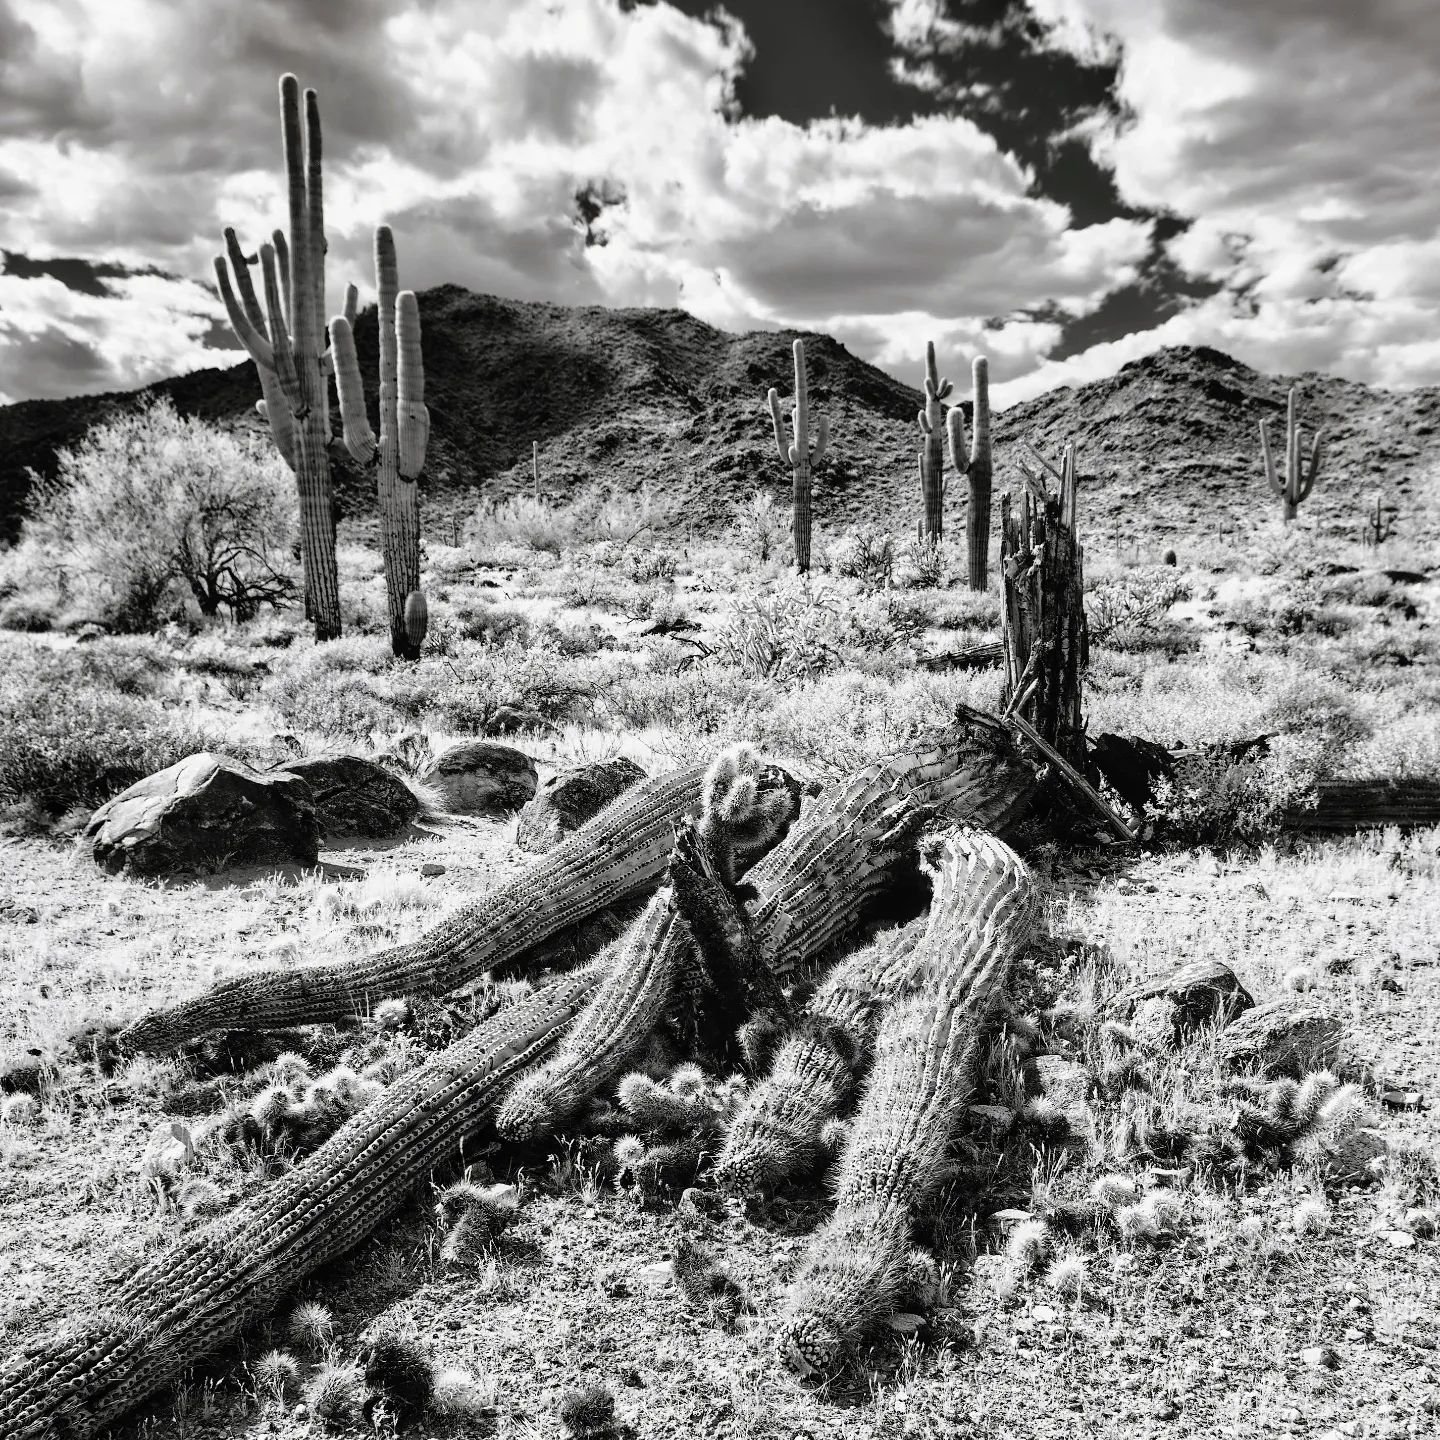 Collapsed Saguaro. IR 720nn converted to B&amp;W. #infraredphotography #infrared #blackandwhite #blackandwhitephotography #landscape #landscapephotography #saguaro #cactus #pentax #pentax_us #pentaxk1 #15mm #longexposure